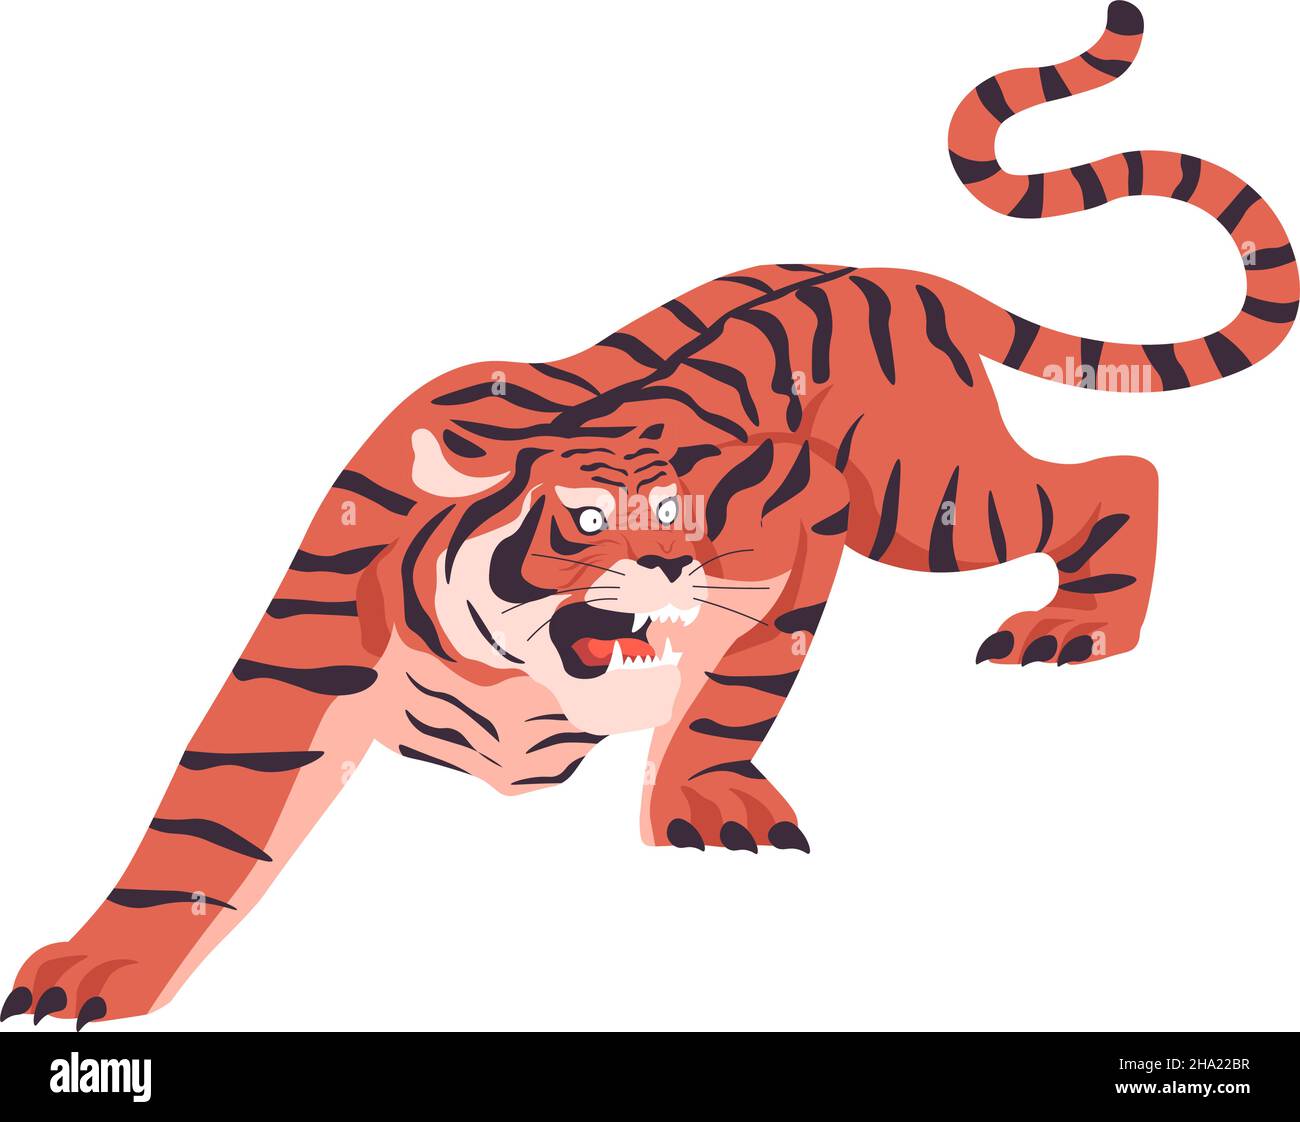 680+ Bengal Tiger Roar Stock Illustrations, Royalty-Free Vector Graphics &  Clip Art - iStock